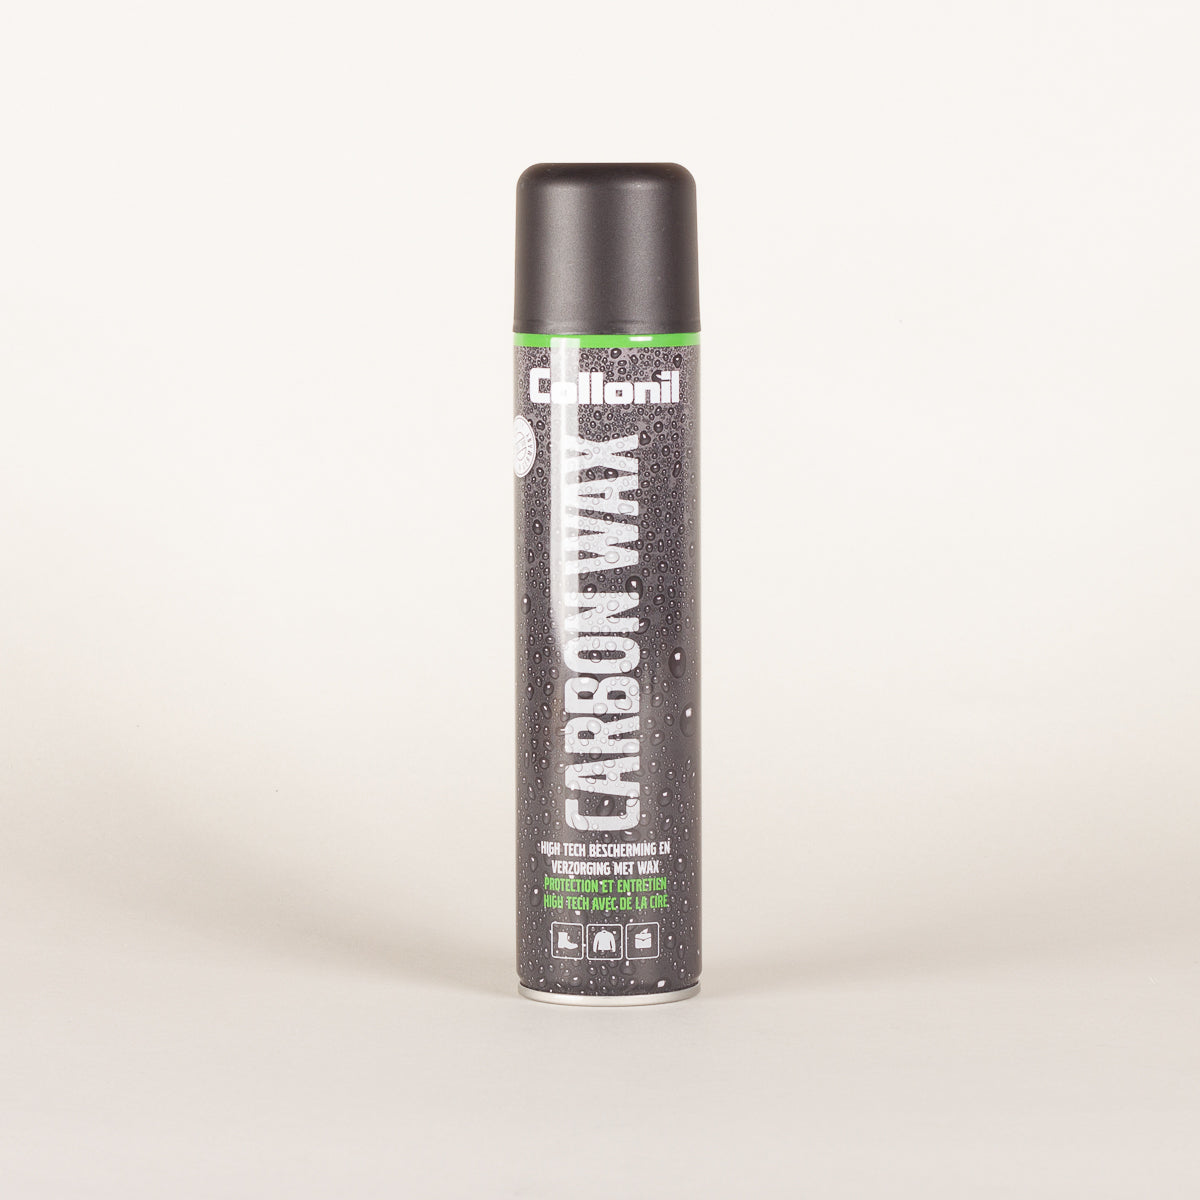 Collonil Carbon Wax spray